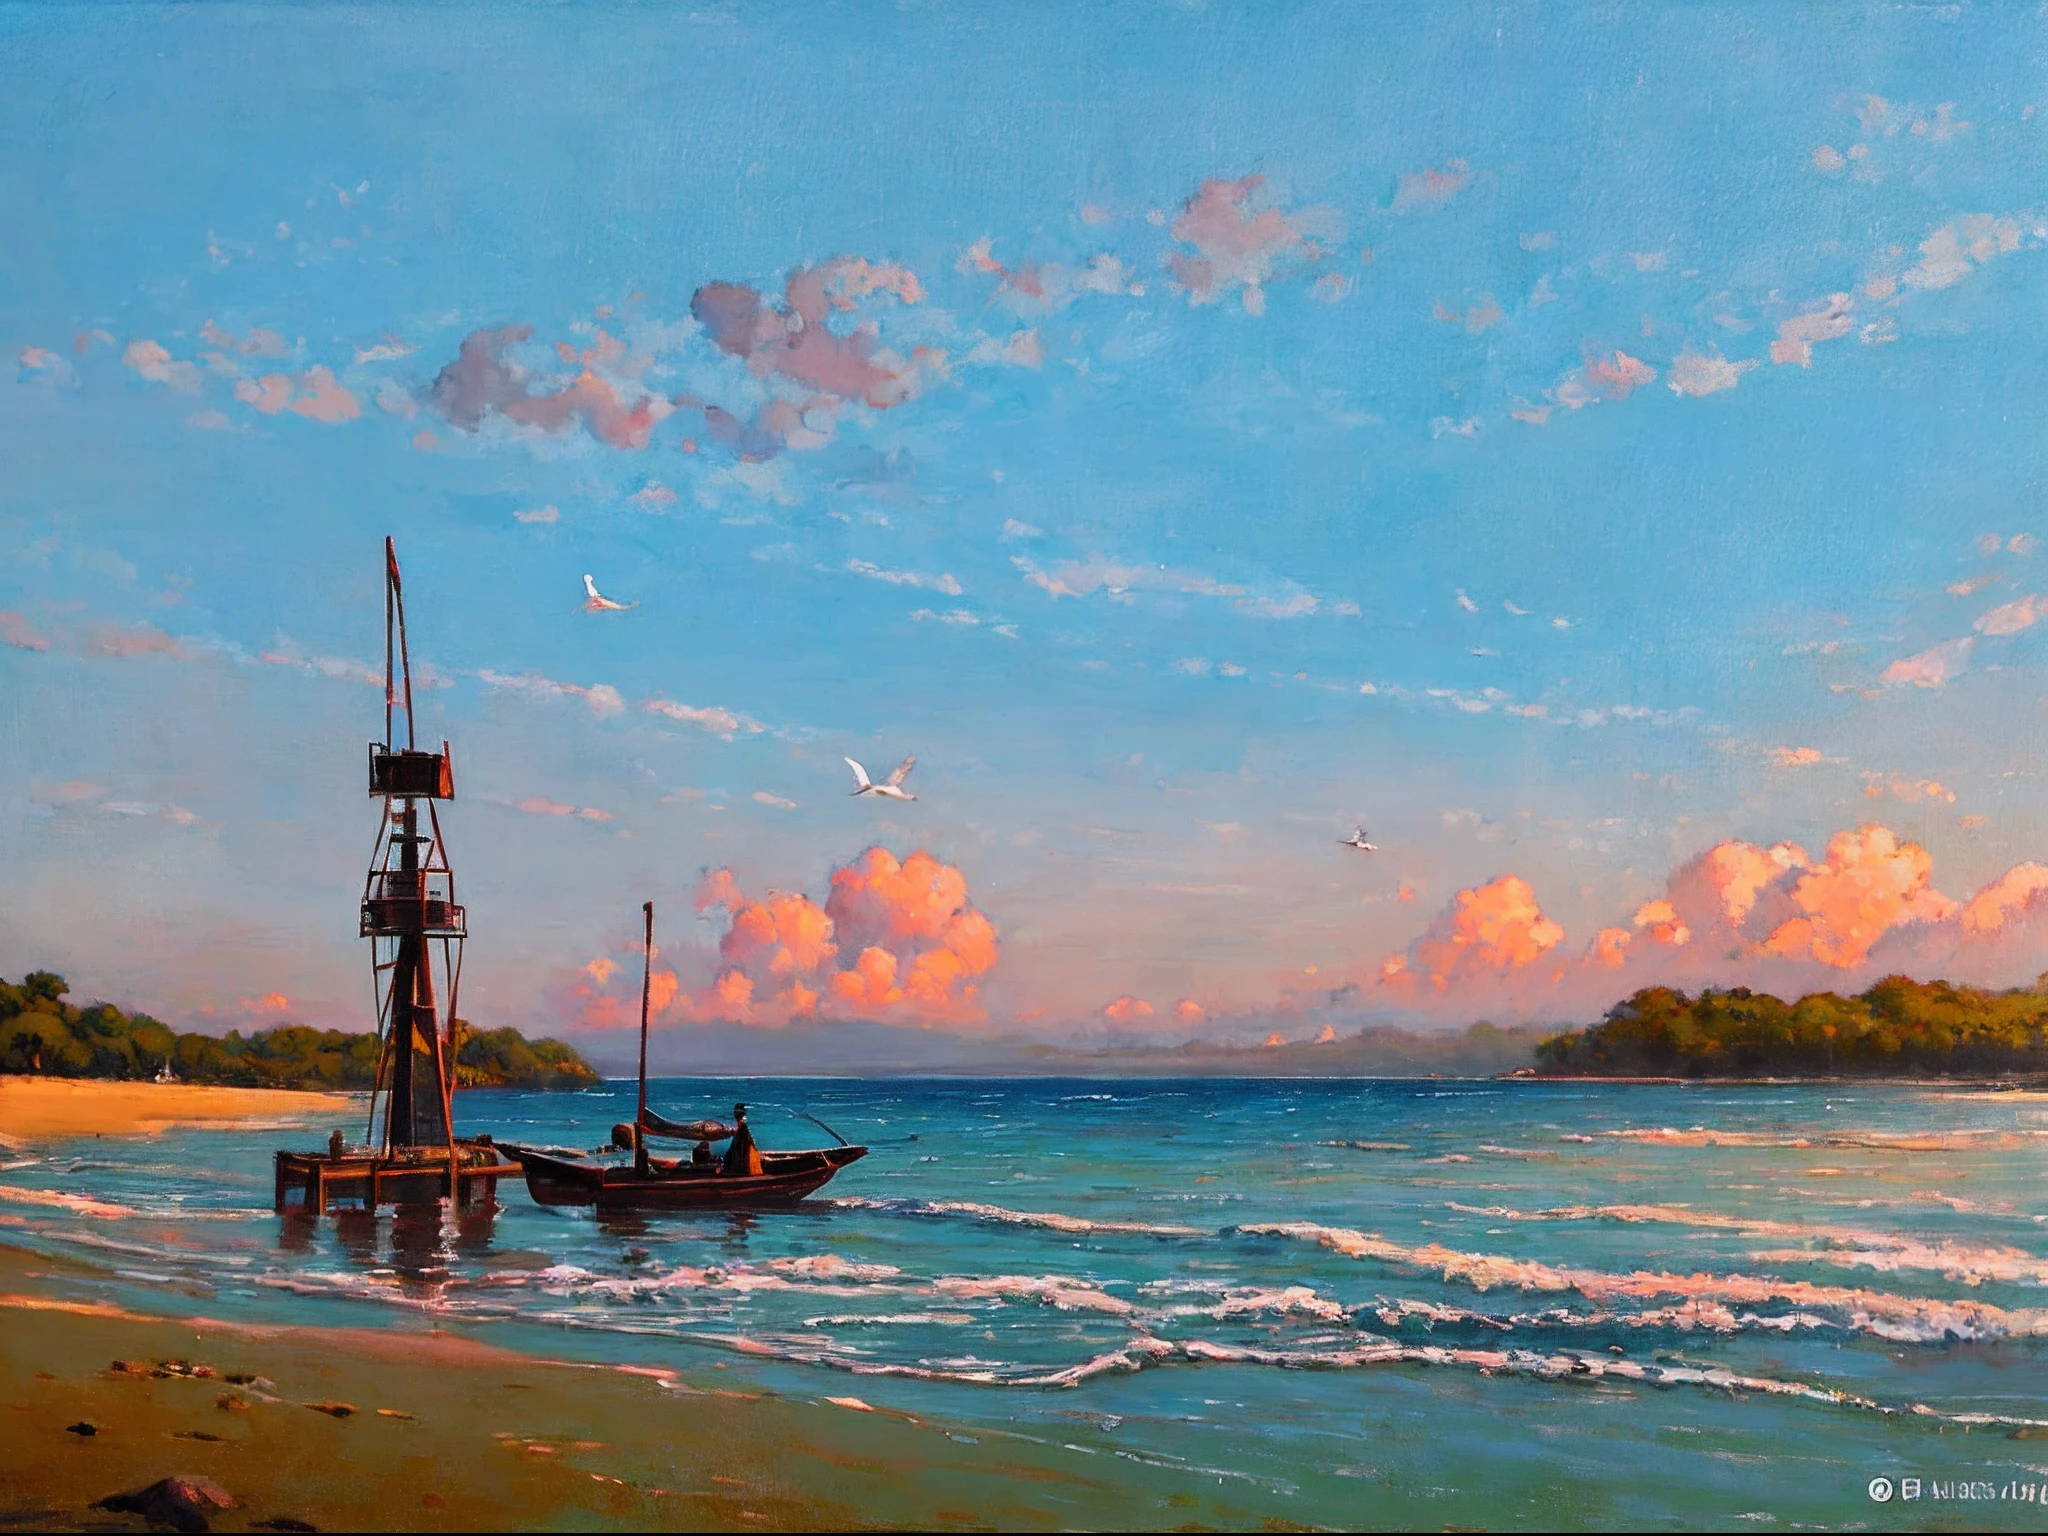 "Stunning 오일 페인팅 of beach landscape featuring a tranquil sunrise, 잔잔한 파도, 먼 배, 그림 같은 전망대, 구름, 그리고 하늘을 나는 새들의 우아한 실루엣, (오일 페인팅:1.3), (걸작:1.3), (떠는:1.2)"